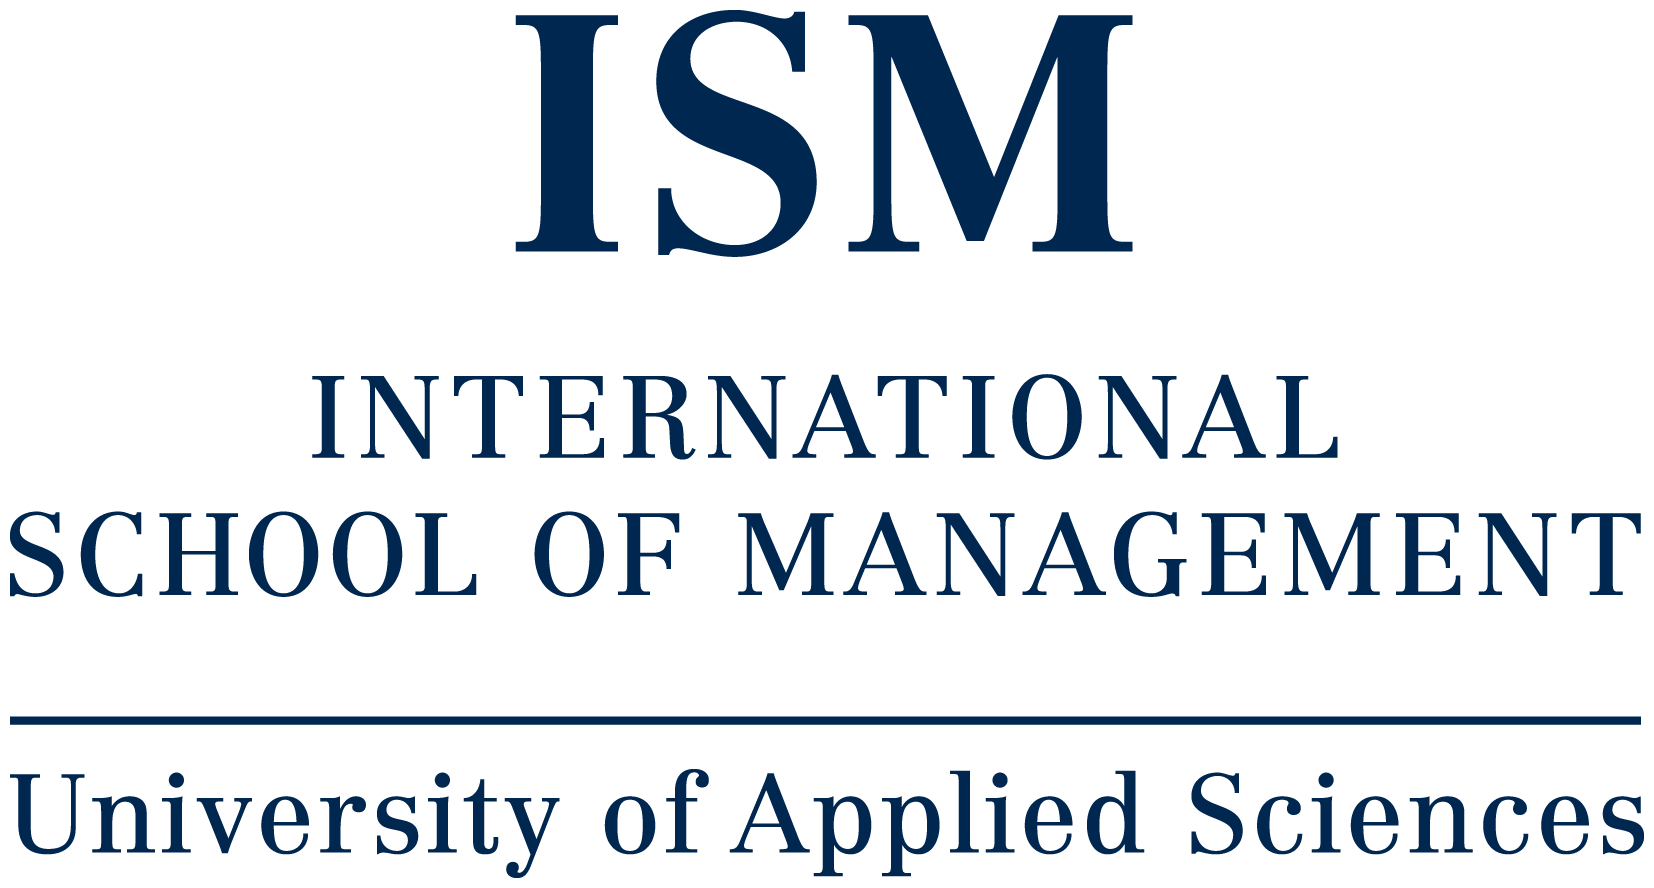 International School of Management GmbH (ISM) Logo